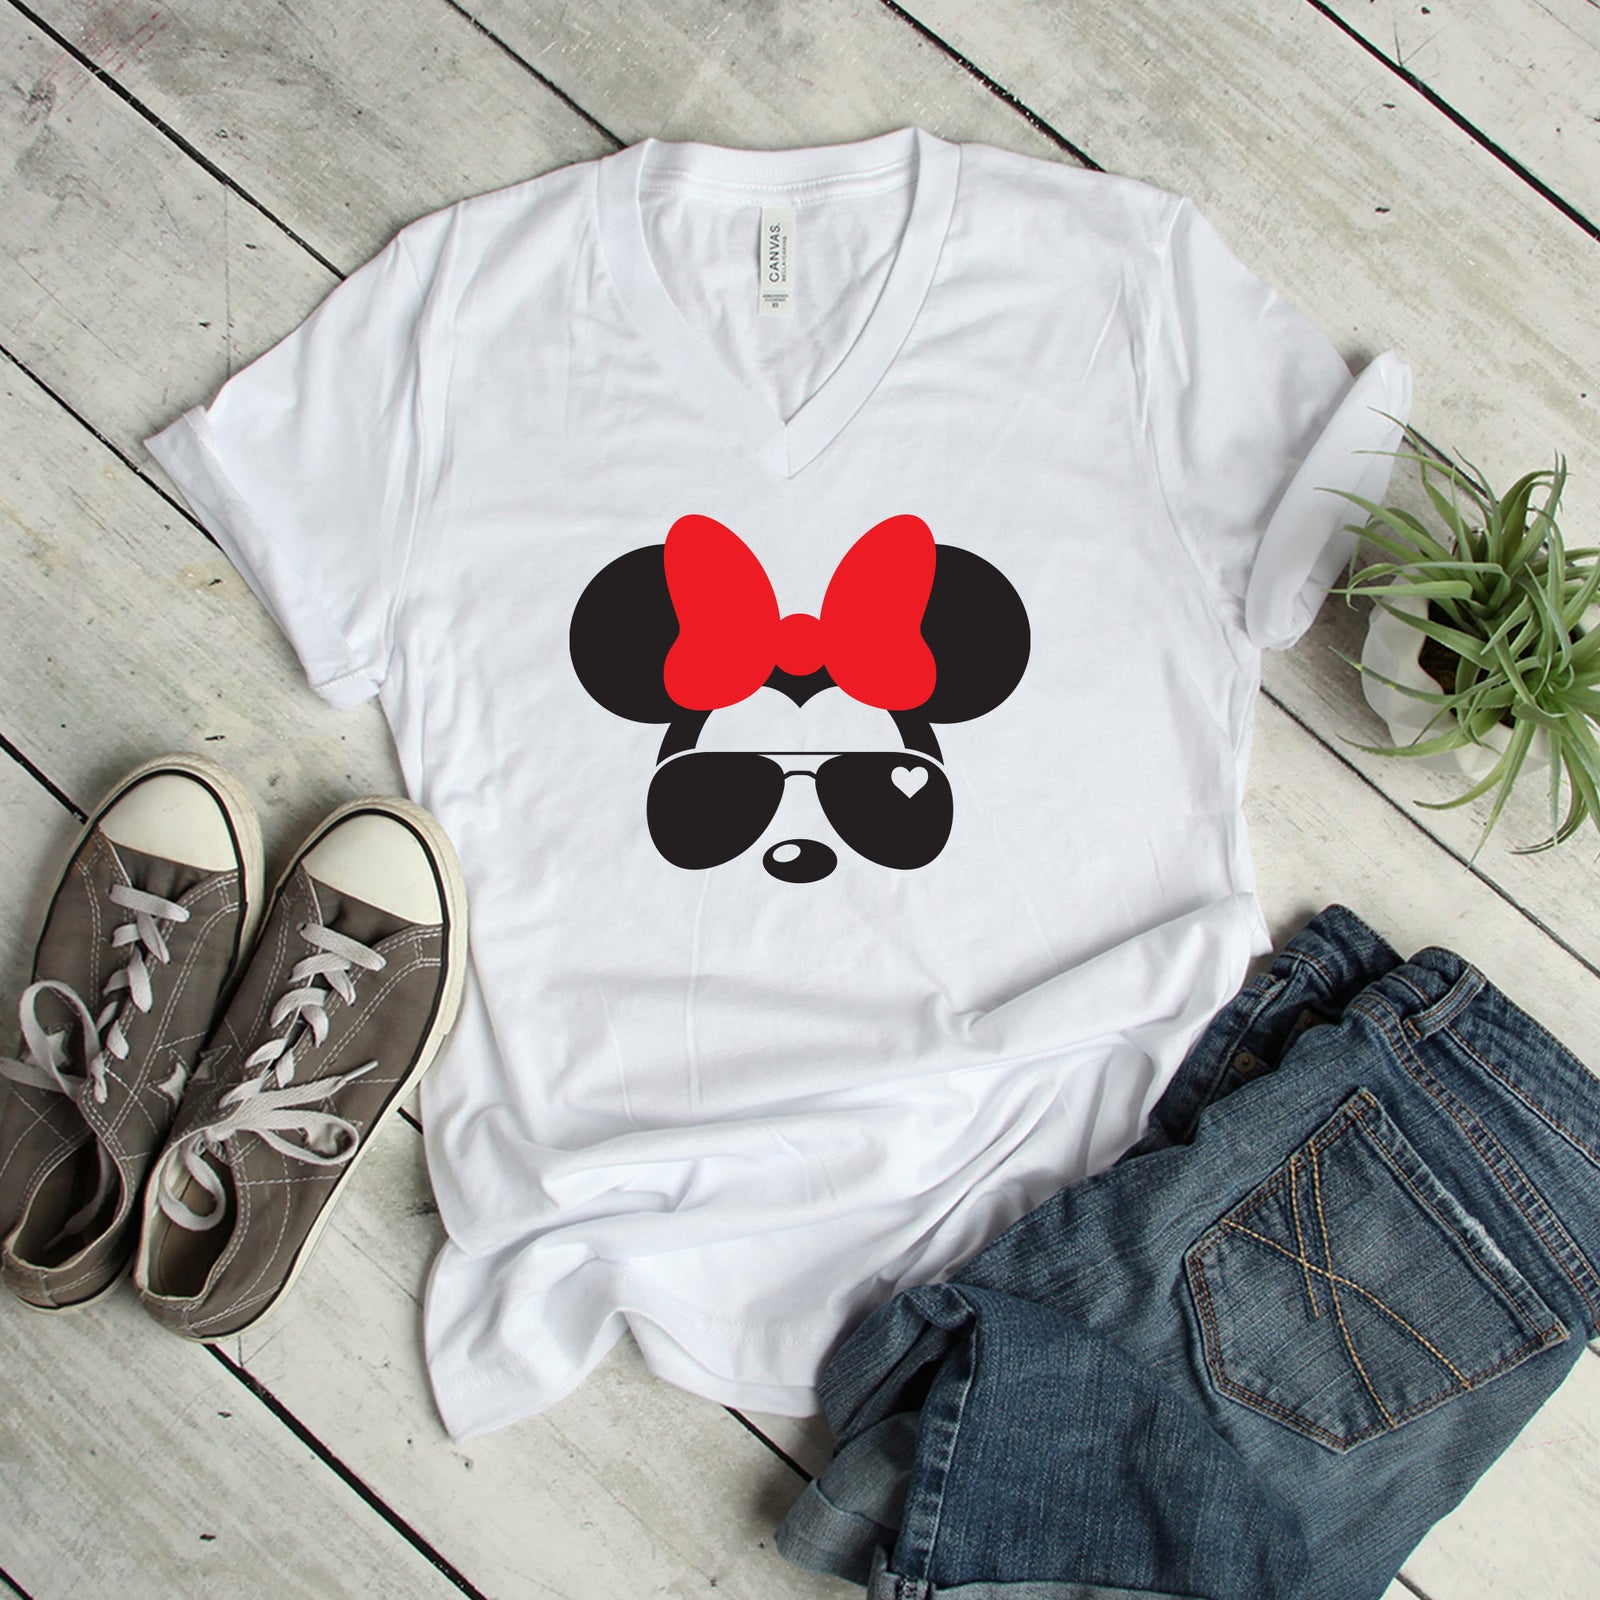 Aviator Minnie t shirt - Disney Trip Matching Shirts - Minnie Mouse T Shirt - Cute Minnie Shirt - Minnie with Sunglasses